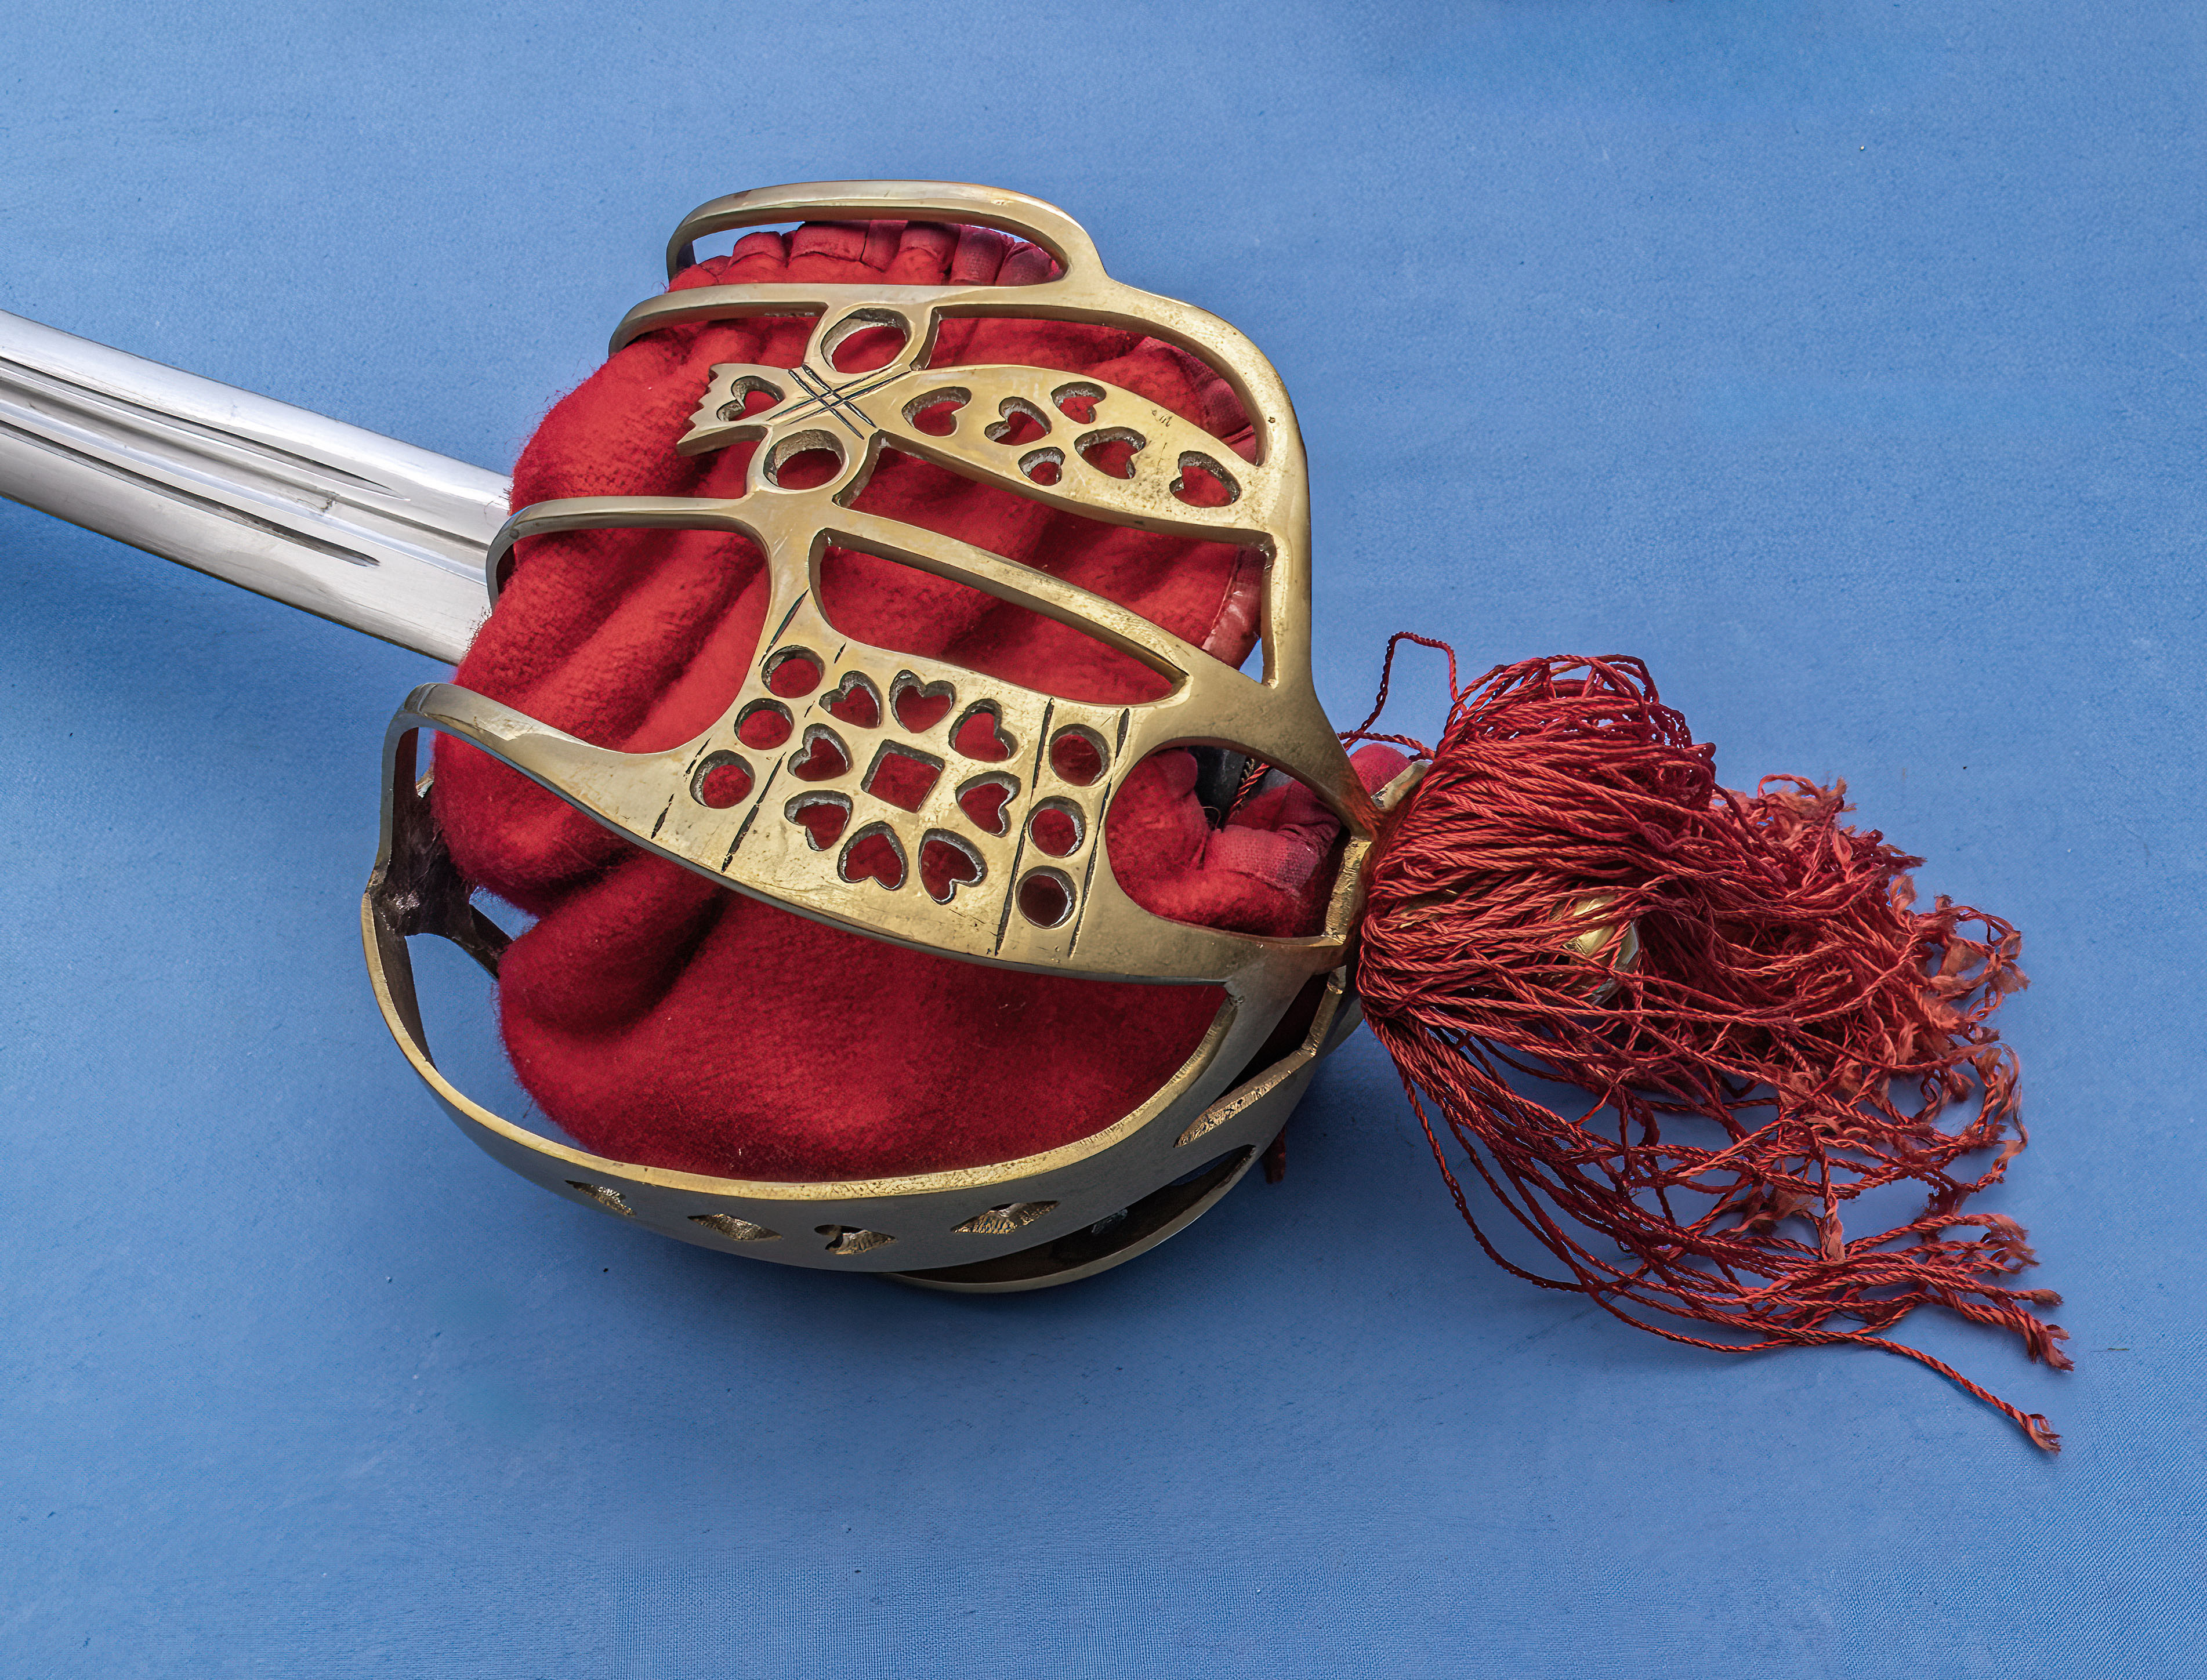 Replica Scottish basket hilt sword - Image 6 of 6